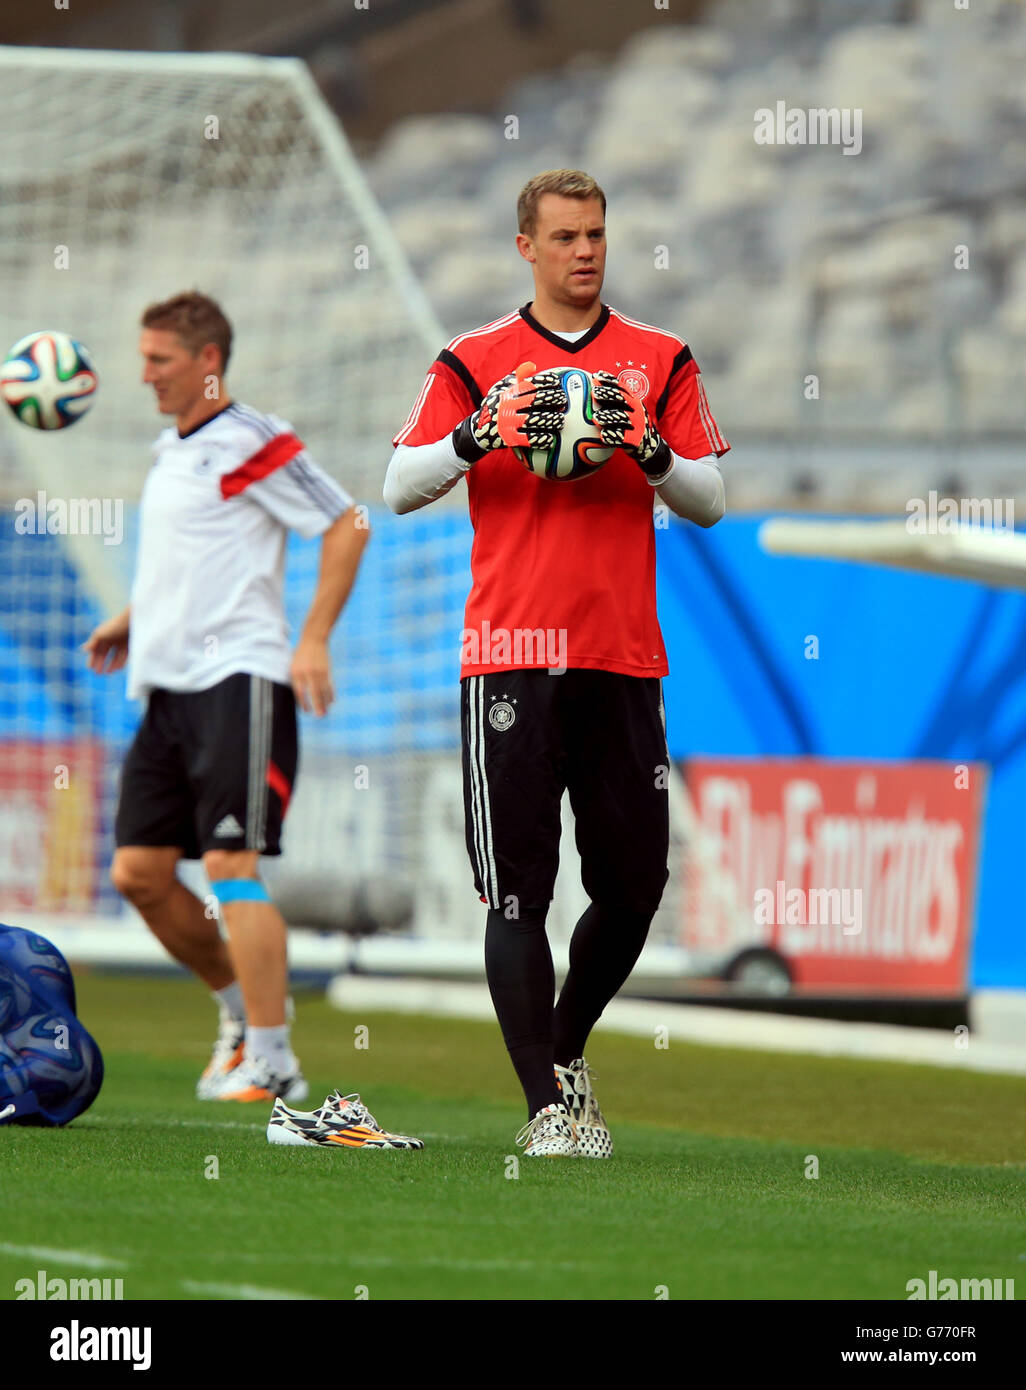 Germany's Manuel Neuer during the training session at Estadio Mineirao, Belo Horizonte, Brazil. Stock Photo